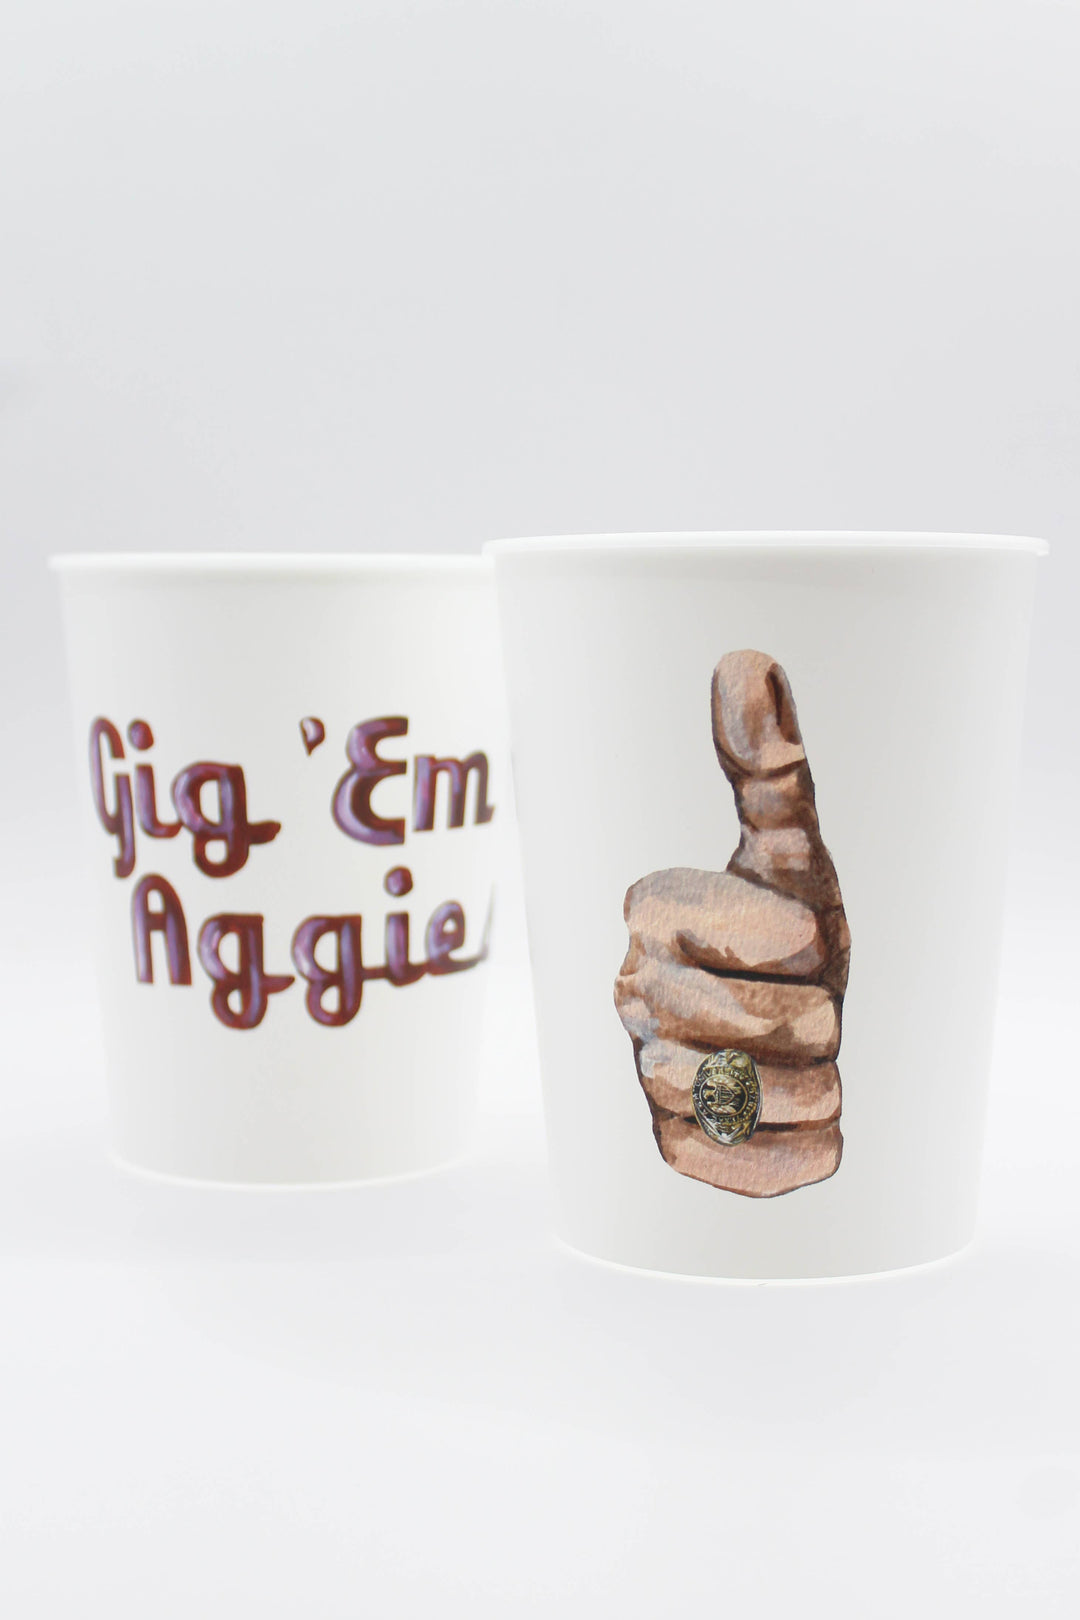 FOSTER - Texas A&M Gig 'Em Aggies Cup Set